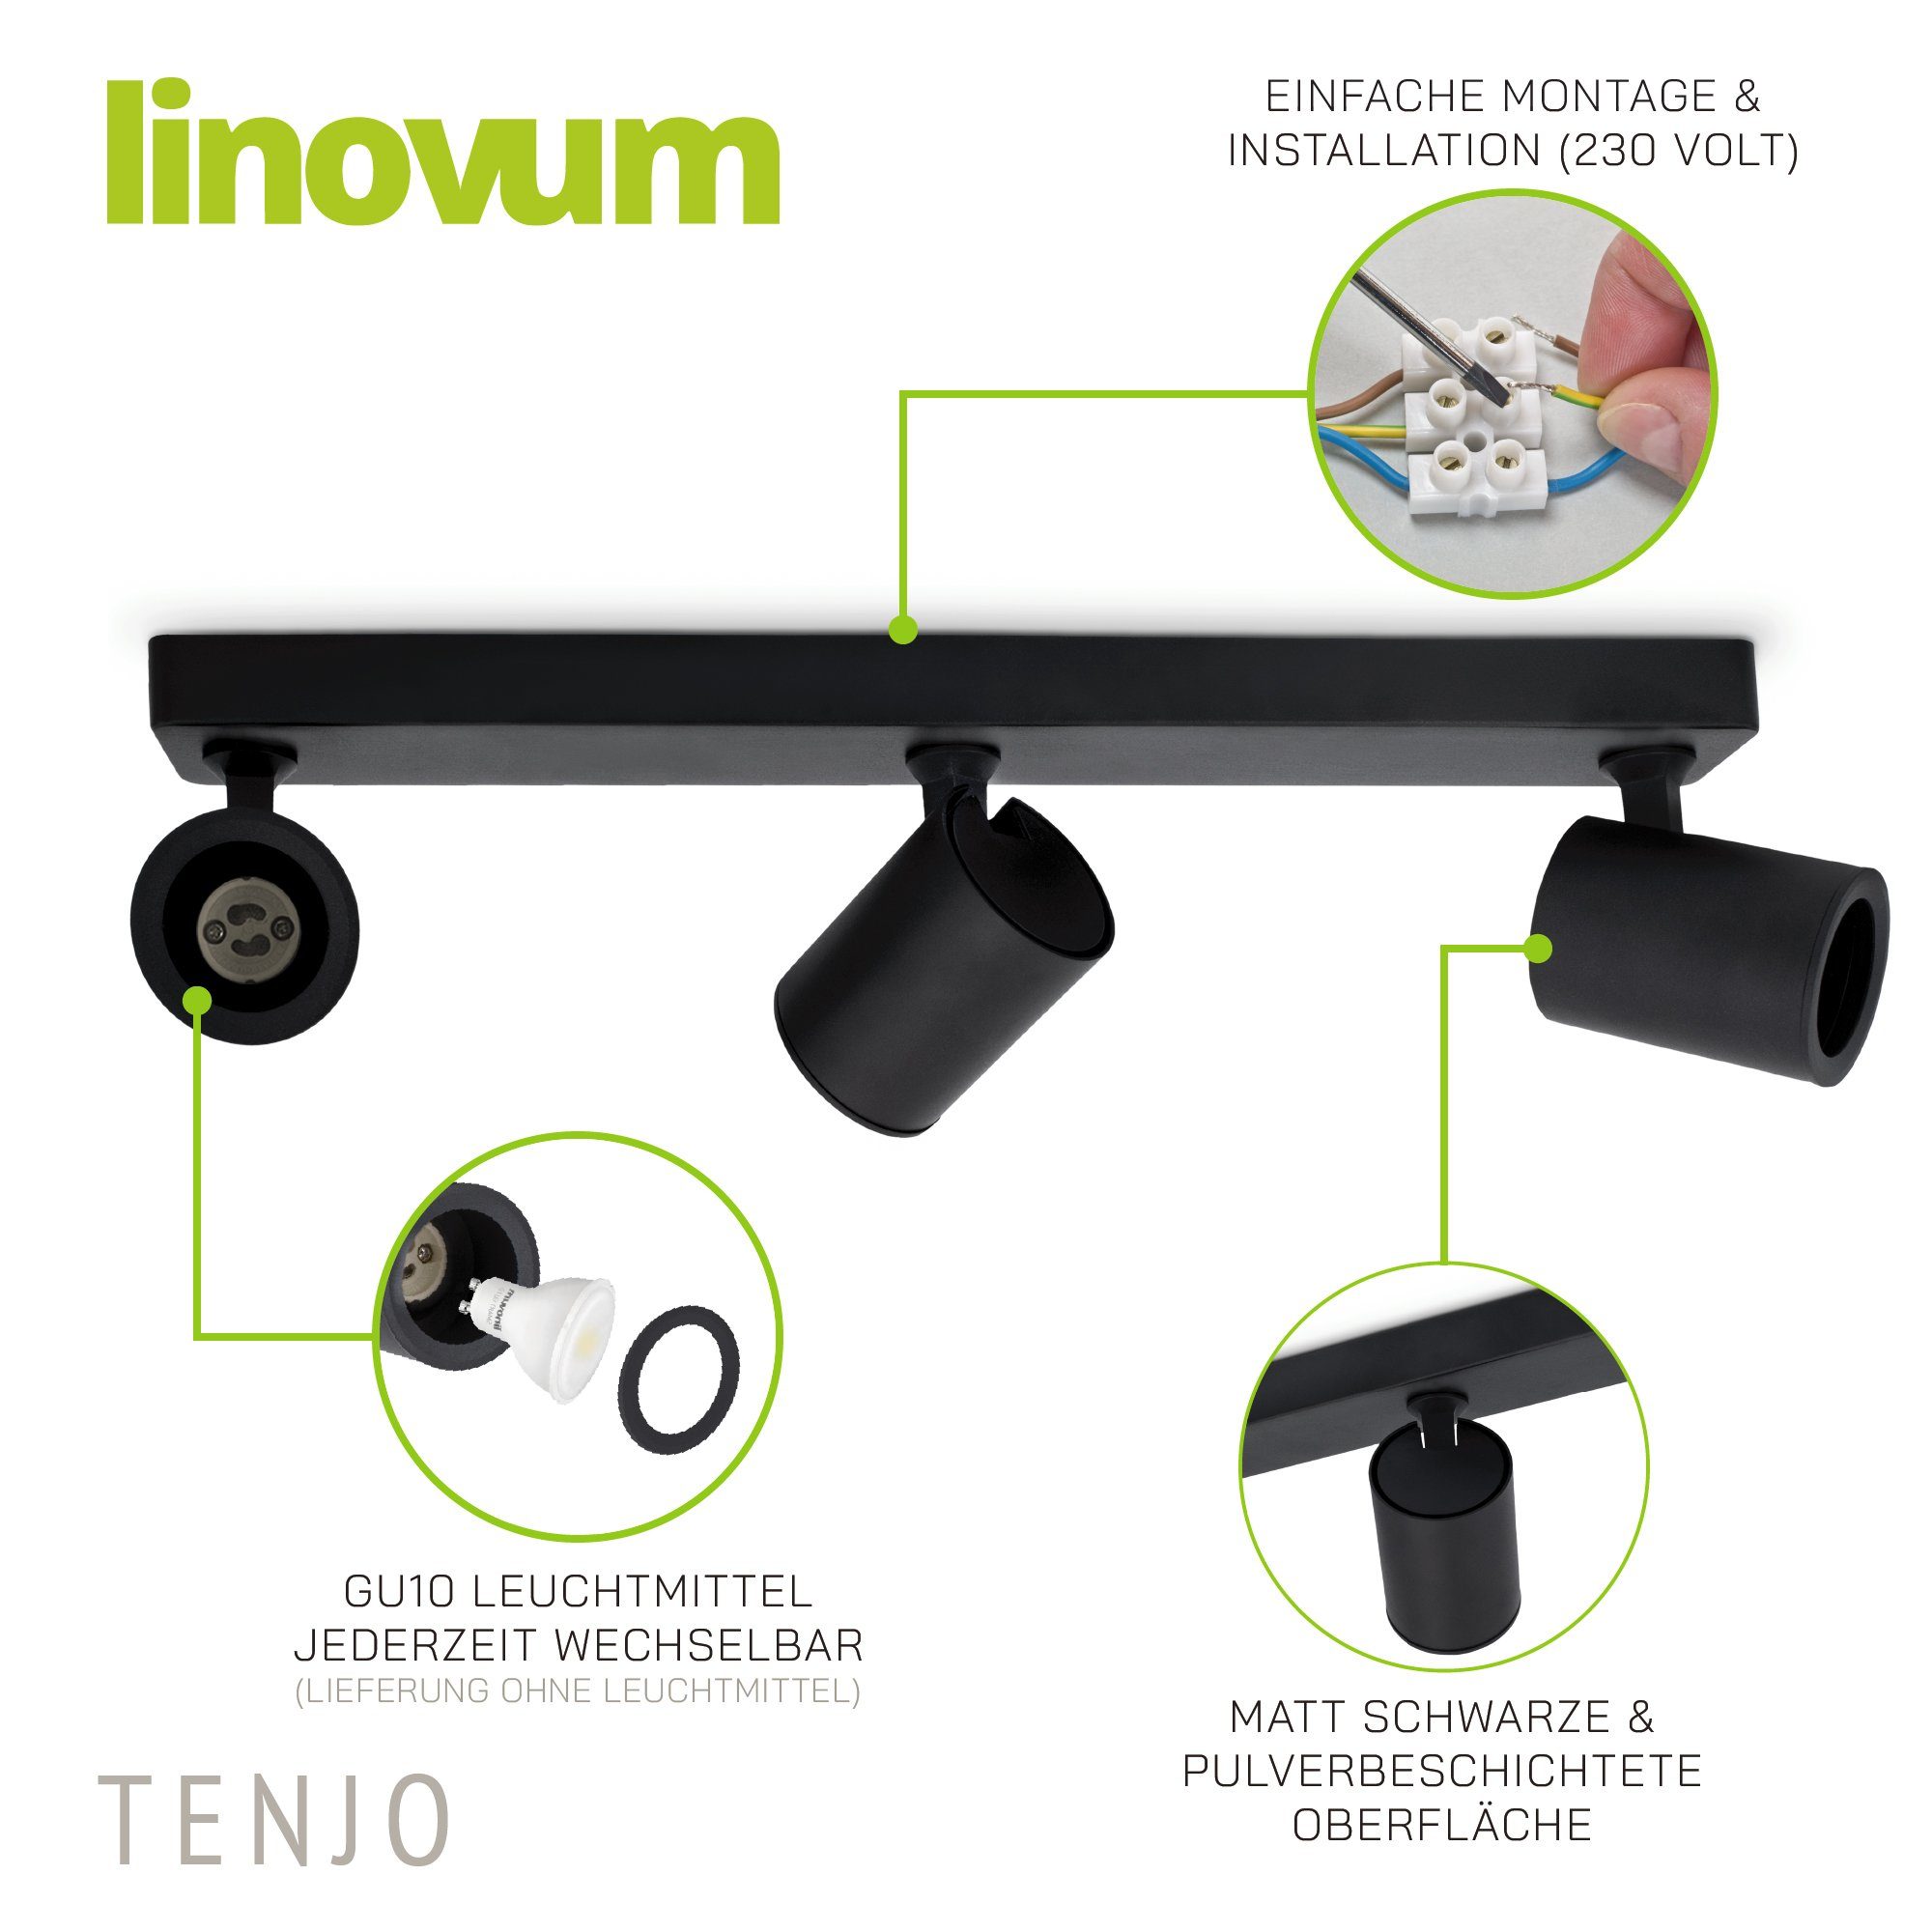 linovum LED Aufbaustrahler TENJO Spots schwarz Leuchtmittel Deckenstrahler schwenkbar, flammig Leuchtmittel drehbar inklusive 3 inklusive, nicht & nicht